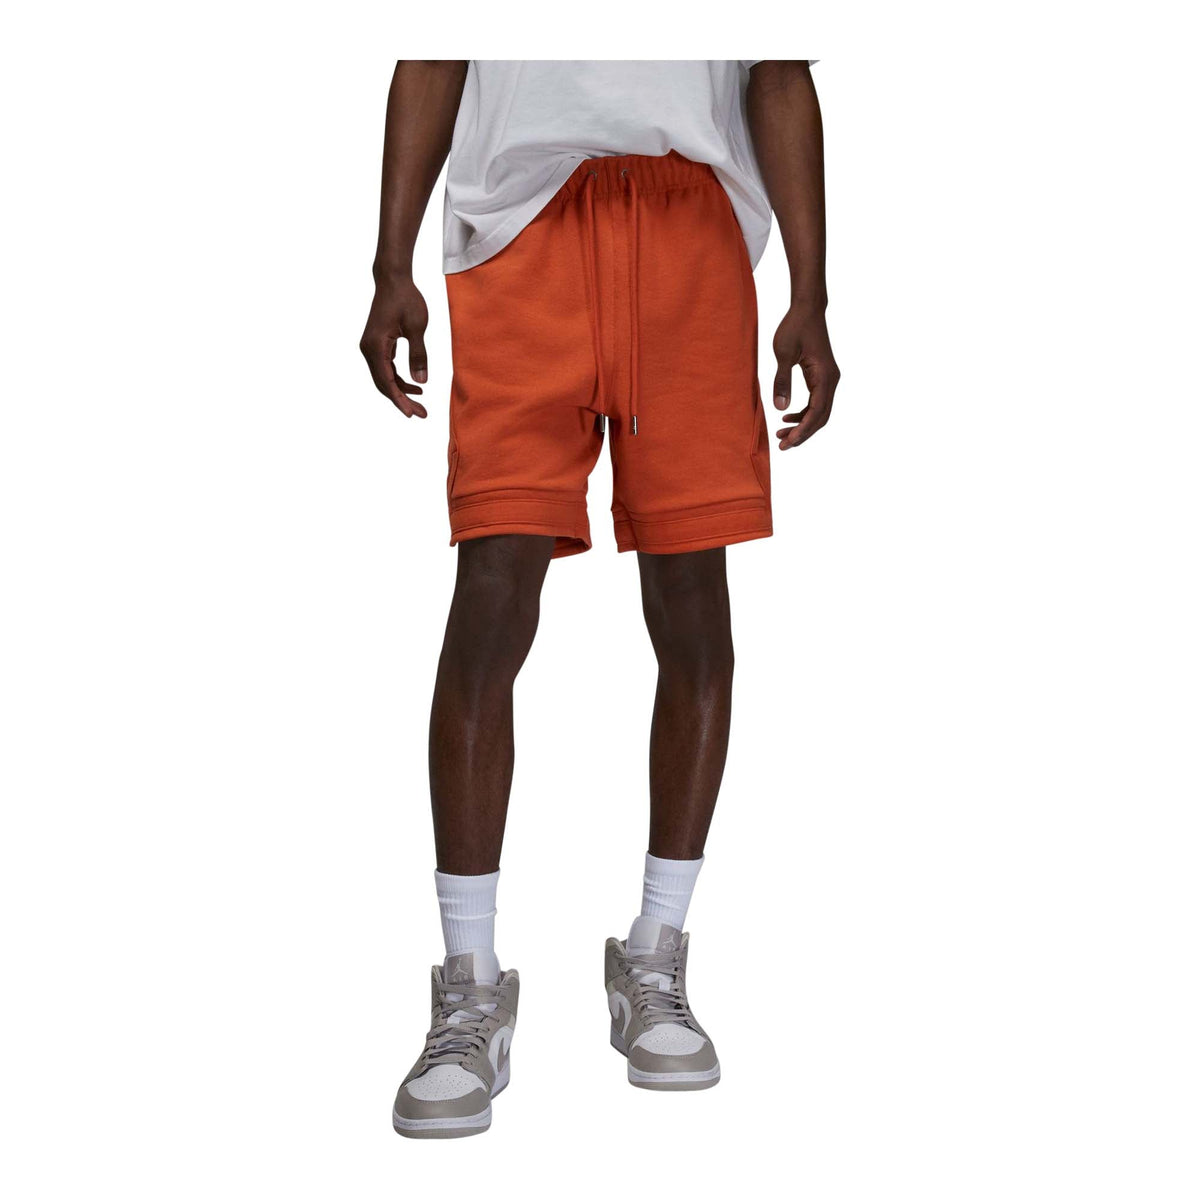 Pants - Premium Trim Basketball Shorts